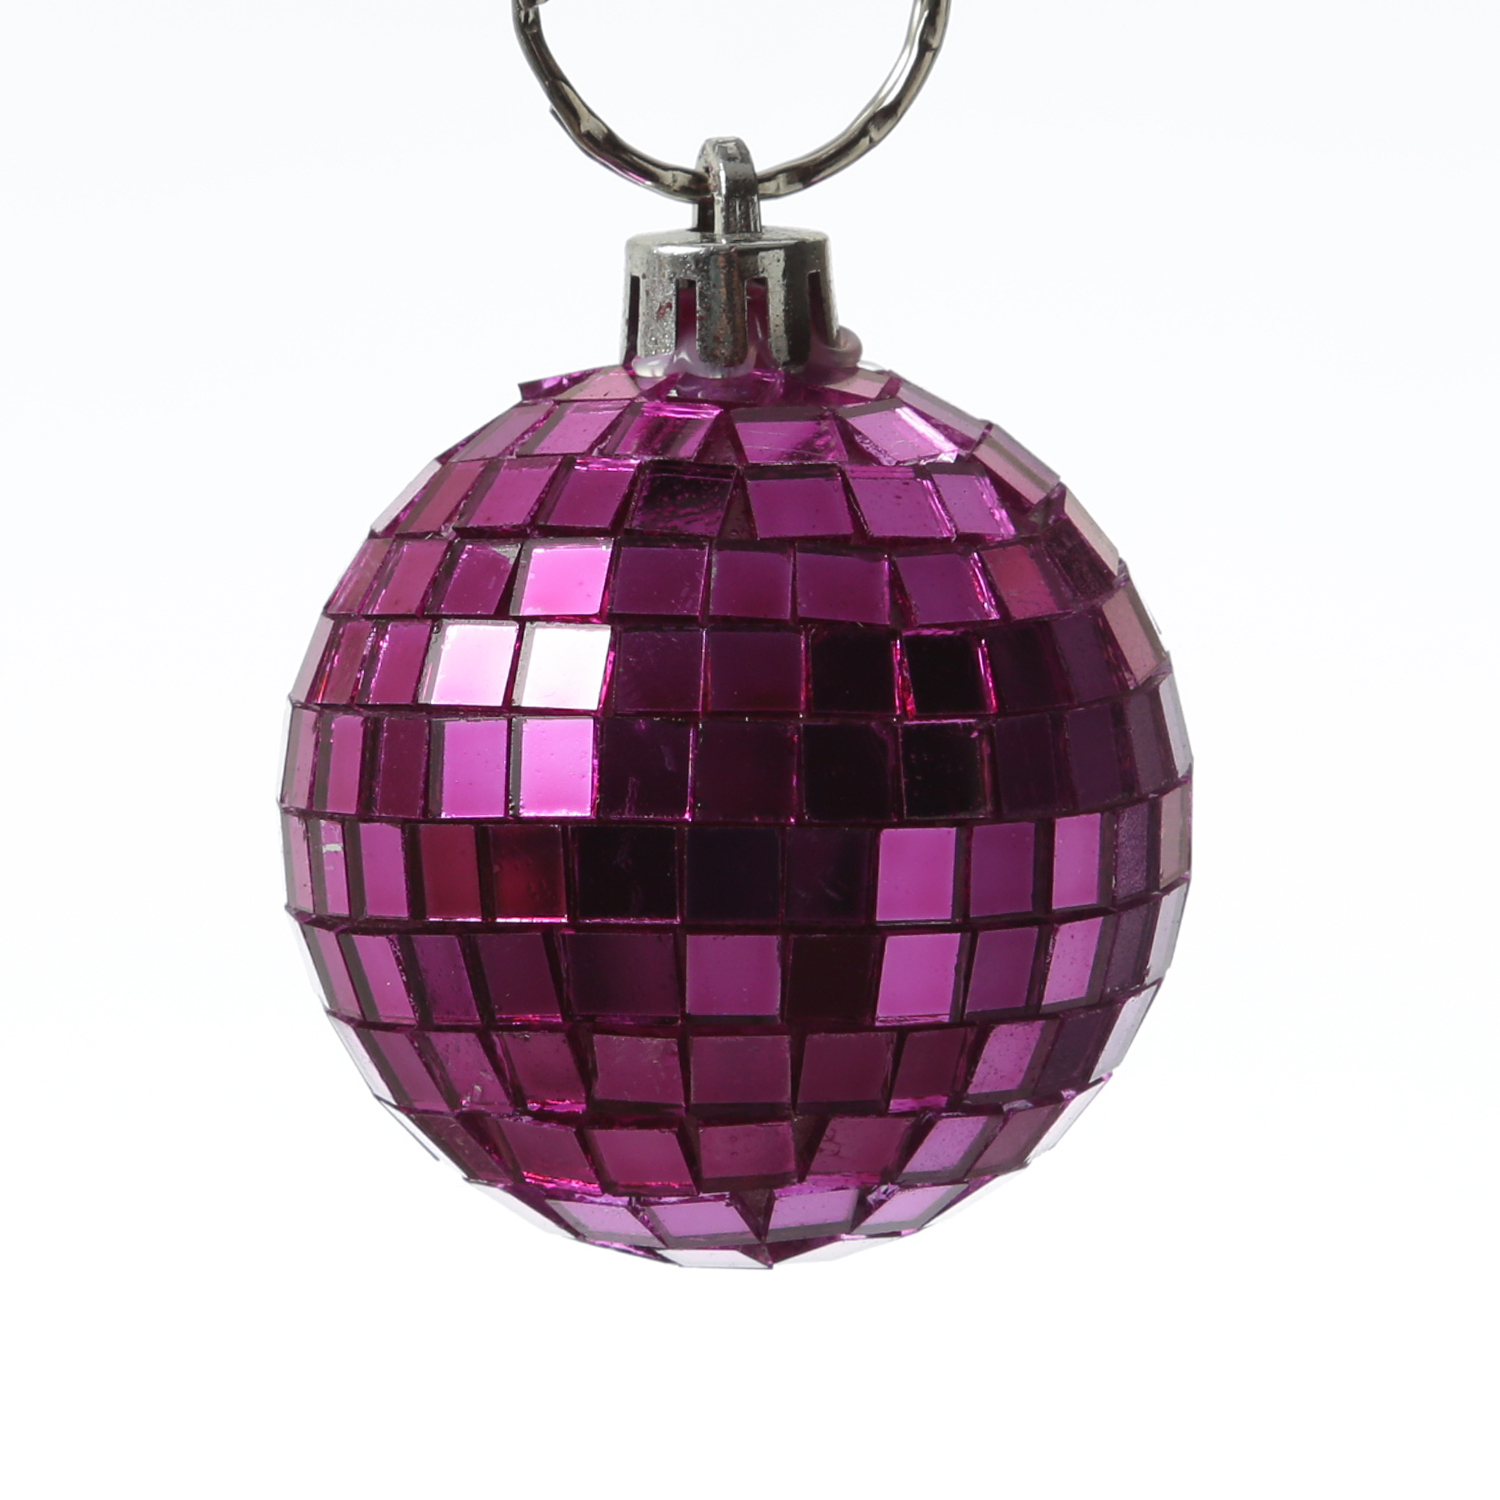 Spiegelkugel 5cm pink- Discokugel Echtglas zur Dekoration